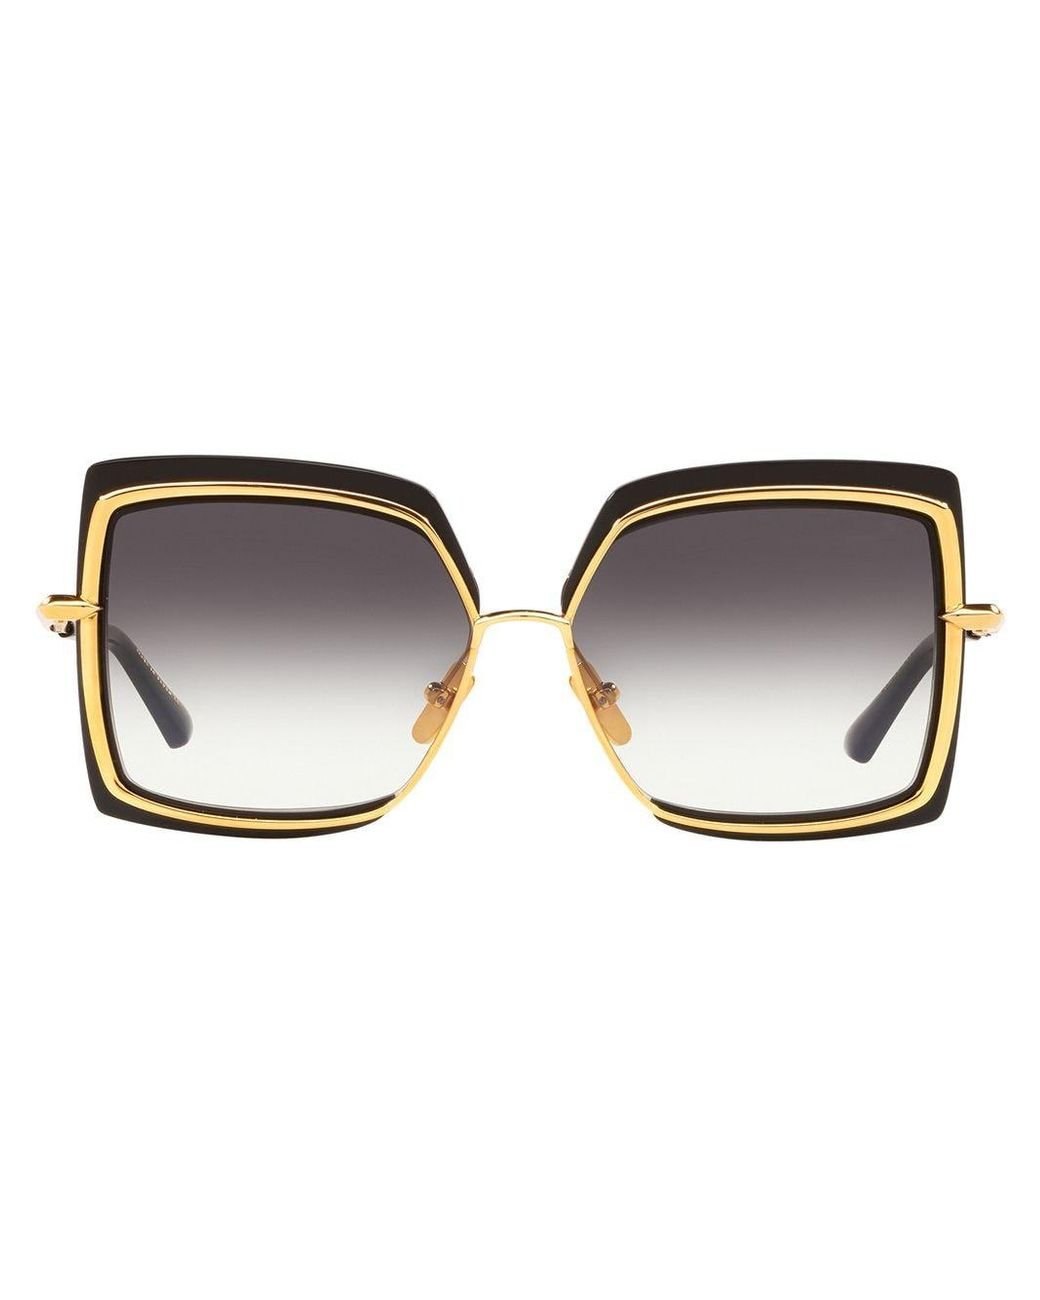 Dita Eyewear Narcissus Sunglasses in Gold (Gray) - Lyst